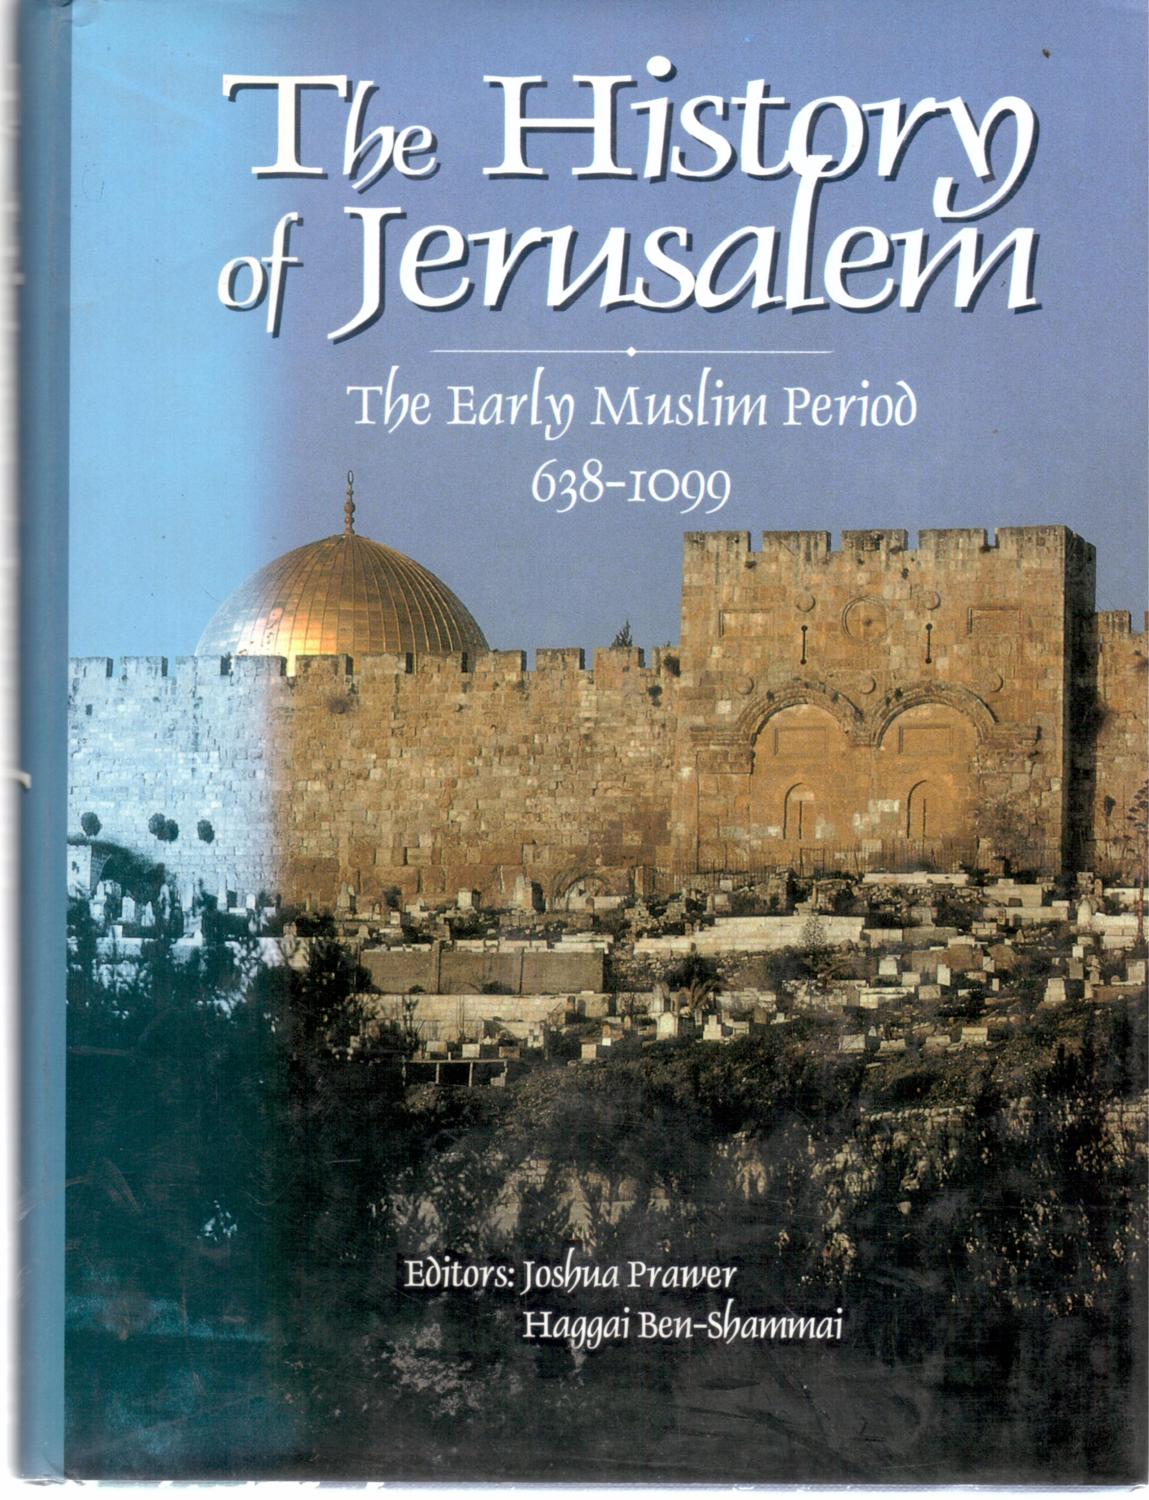 History of Jerusalem: Early Muslim Period, 638-1099 - Joshua Prawer; Haggai Ben-Shammai (Editors)